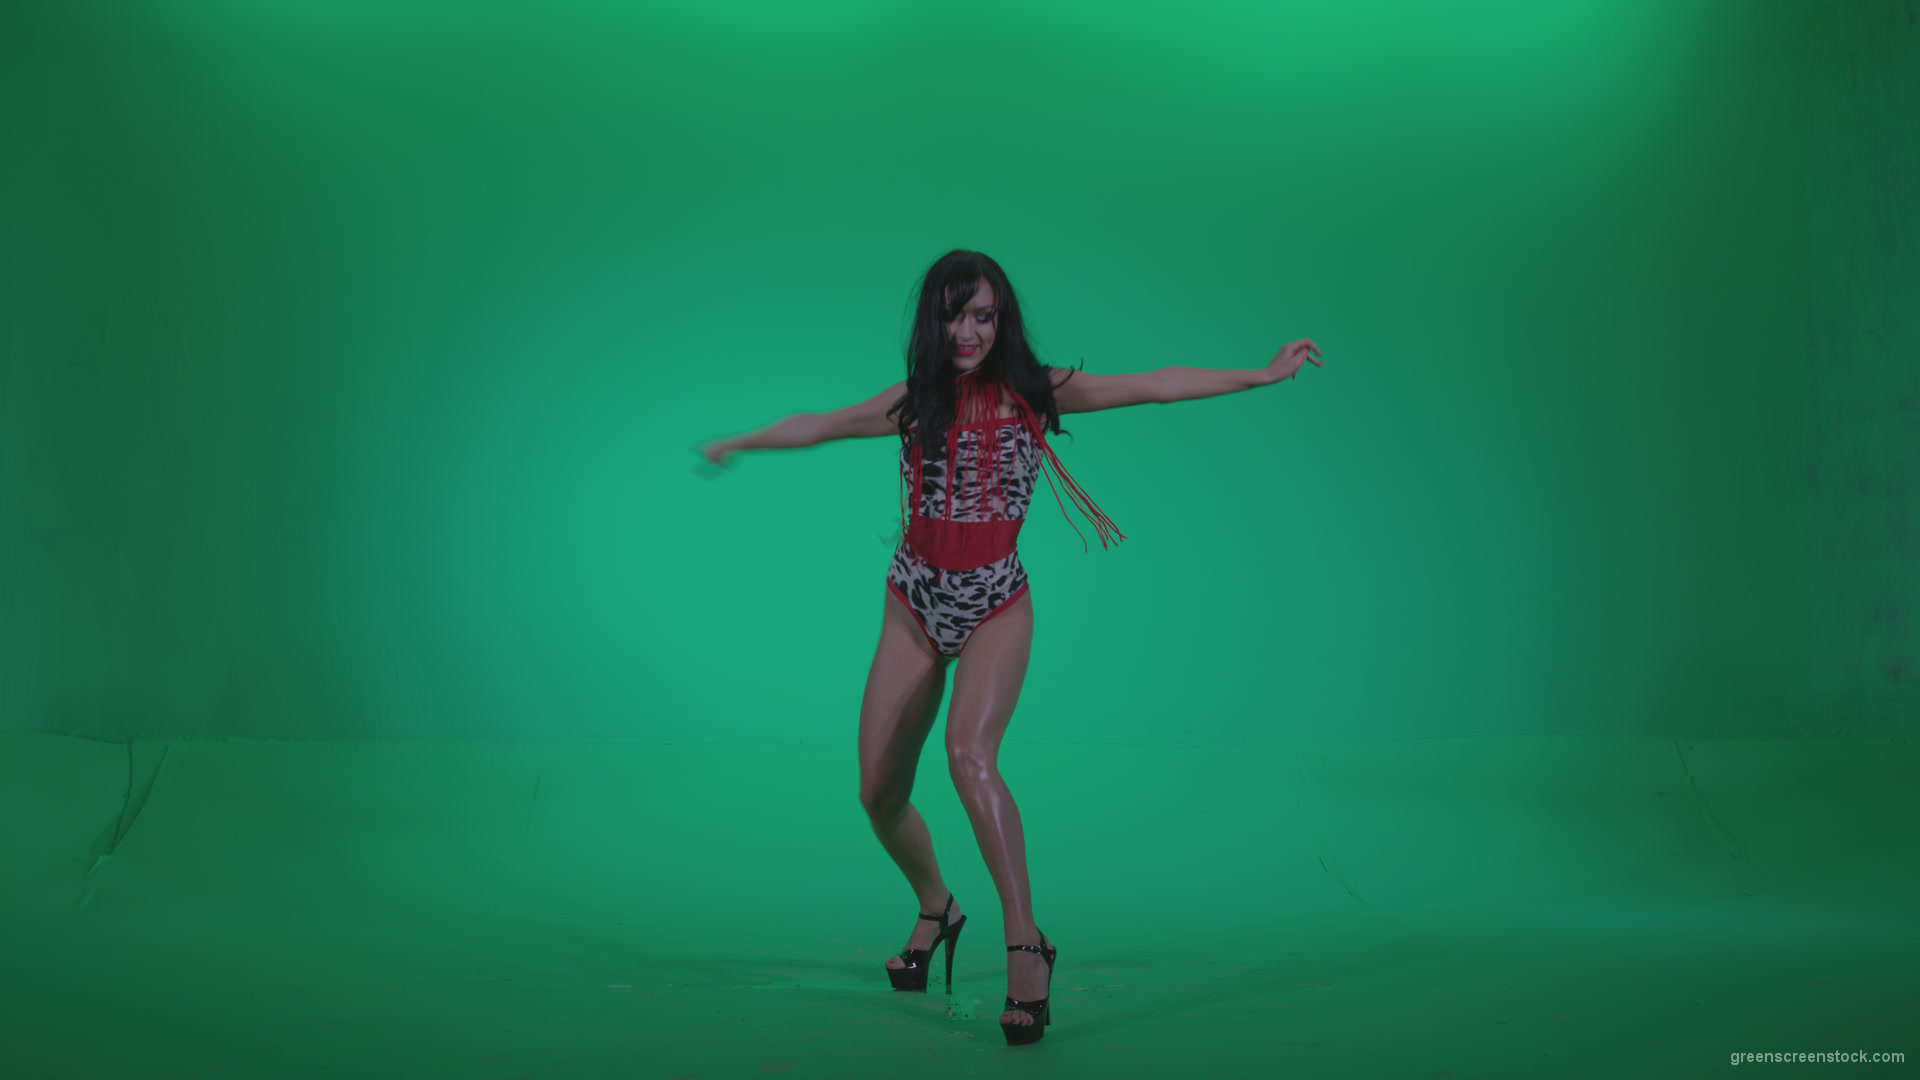 Go-go-Dancer-Red-Dress-r1-Green-Screen-Video-Footage_004 Green Screen Stock